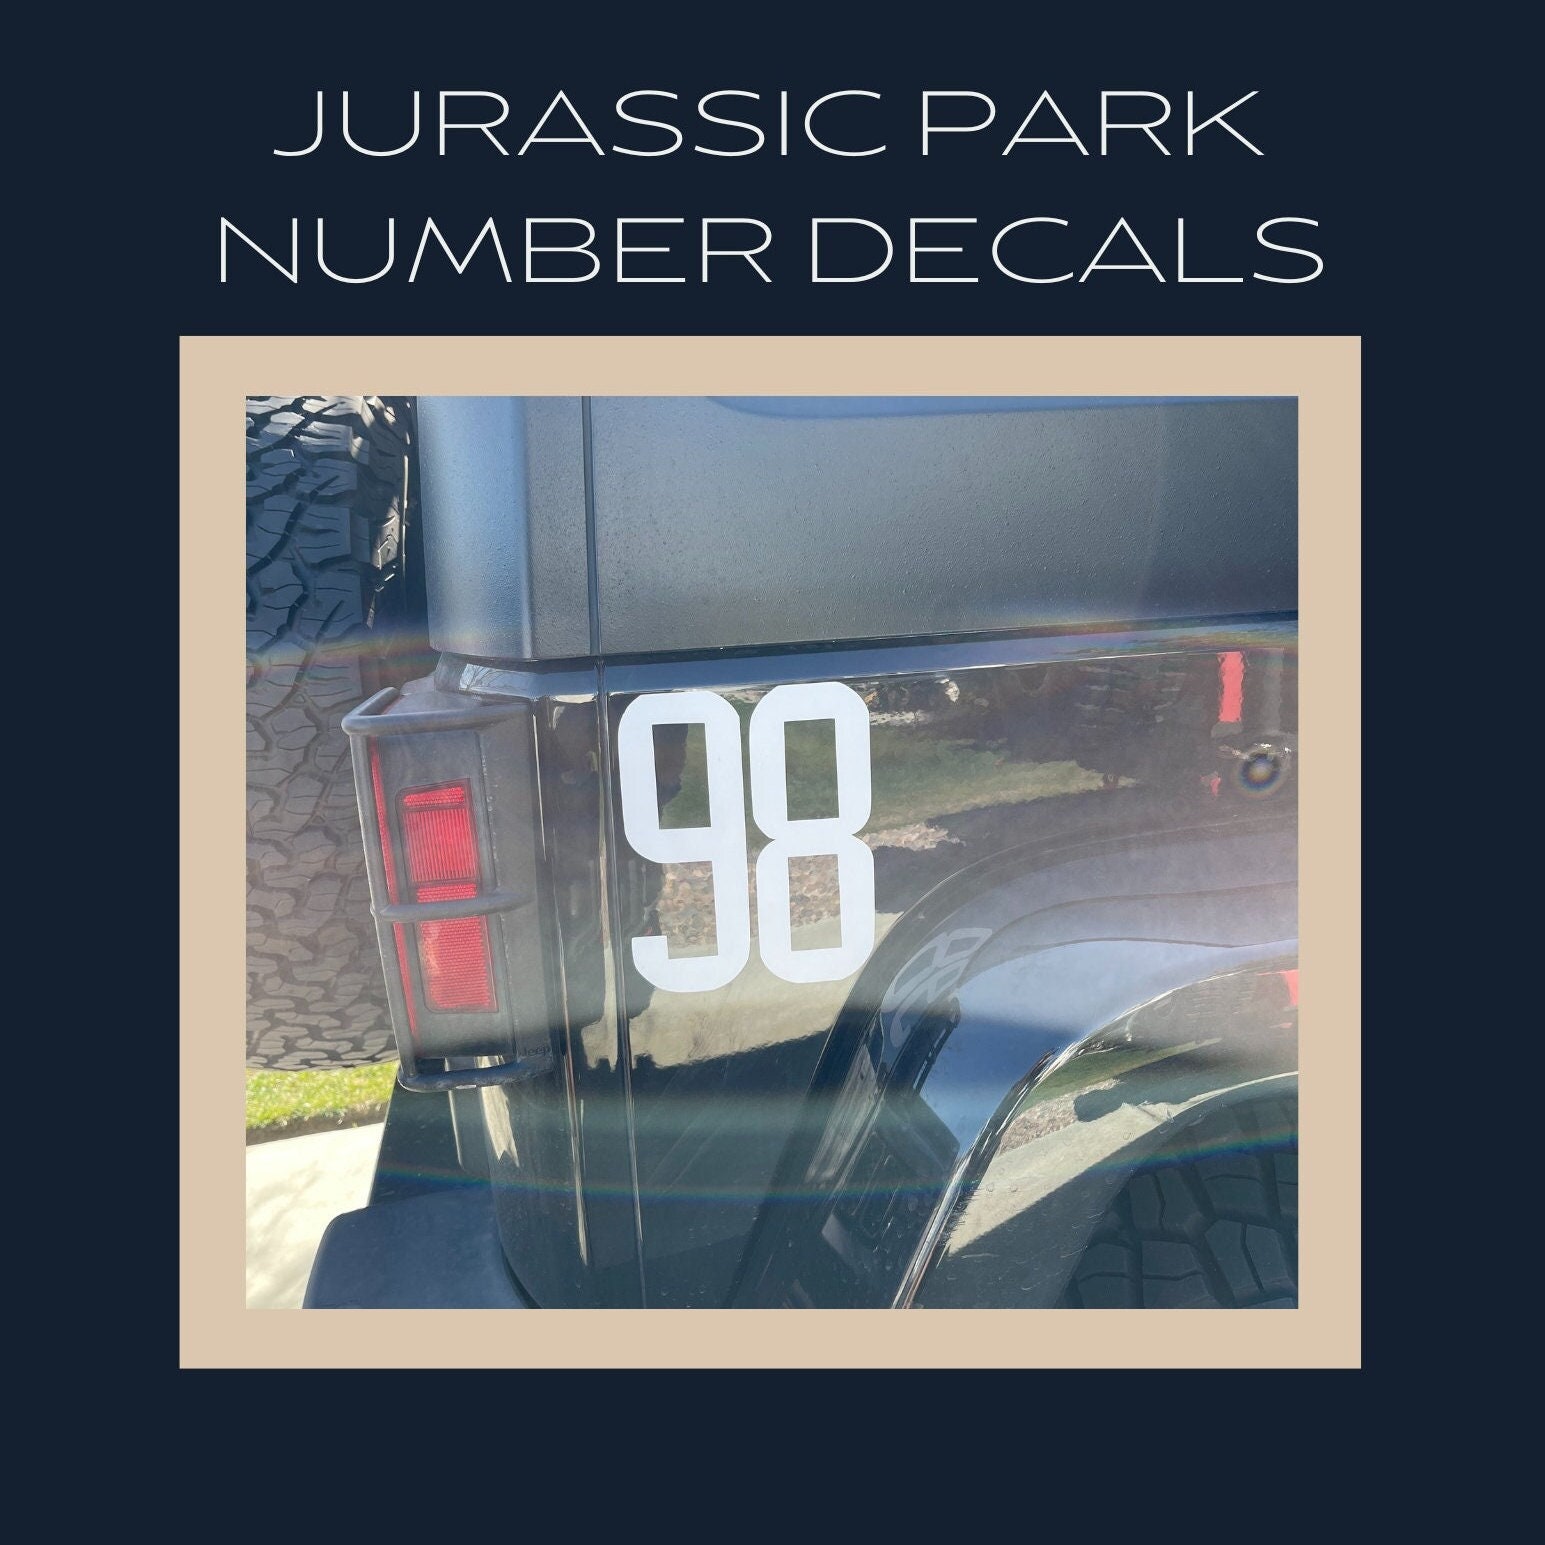 Jurassic World Hood Decal, Door Stickers, USDM Large Movie Prop Jurassic  Park, Dinosaurs, T-rex Birthday Gift, Jeep, Wall Decor 